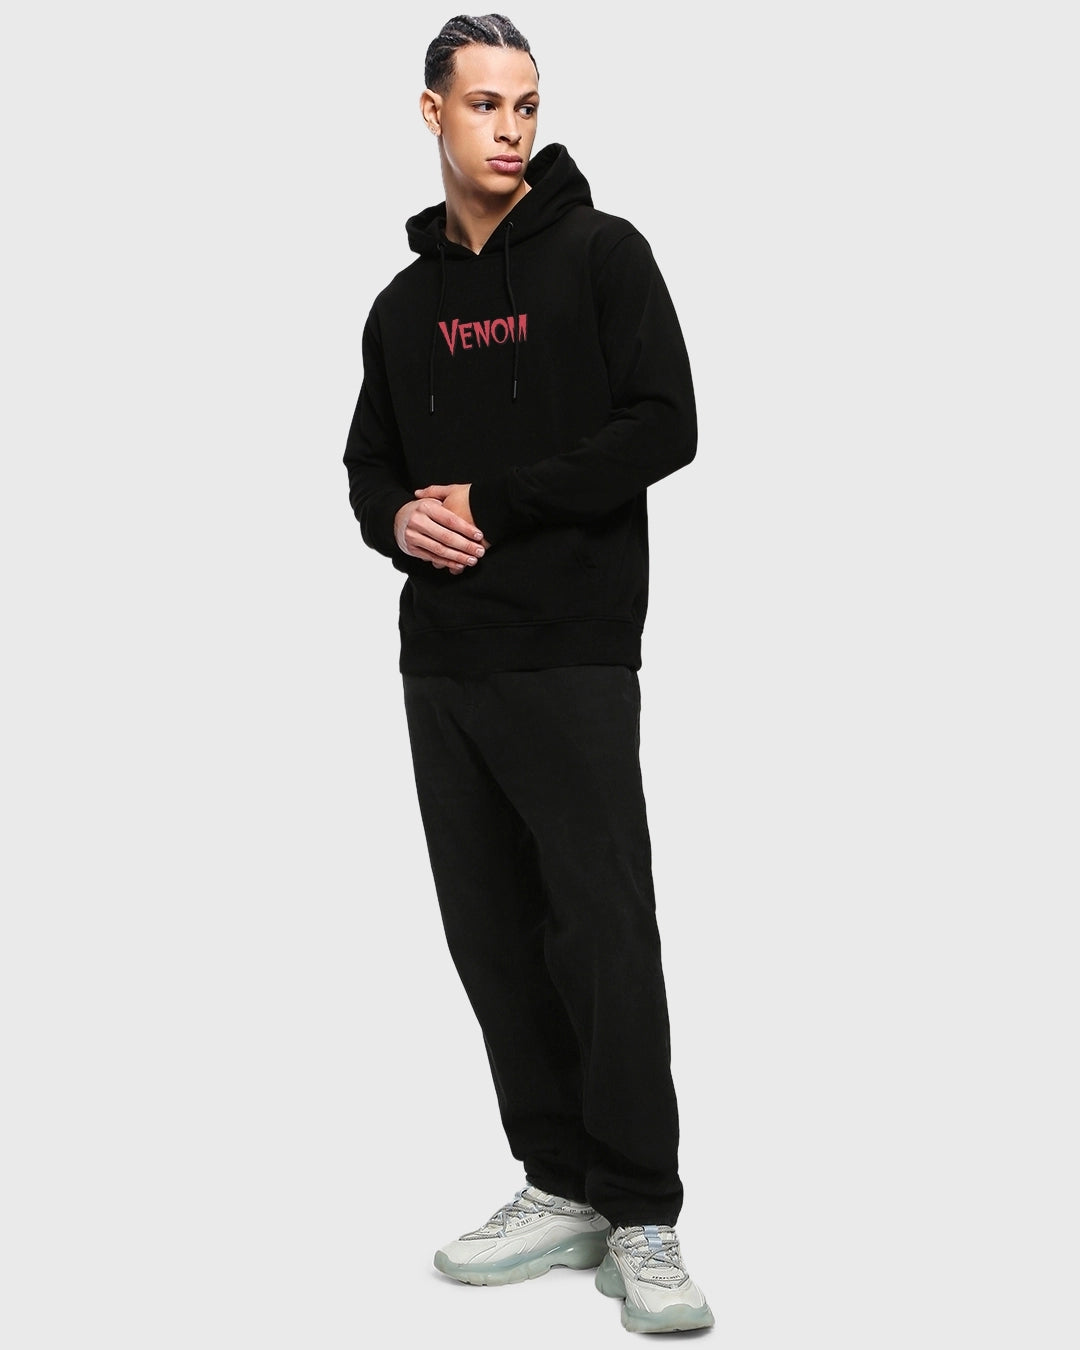 Kold X Windy (Black) Unisex Hoodie — Kold x Windy Official Merchandise